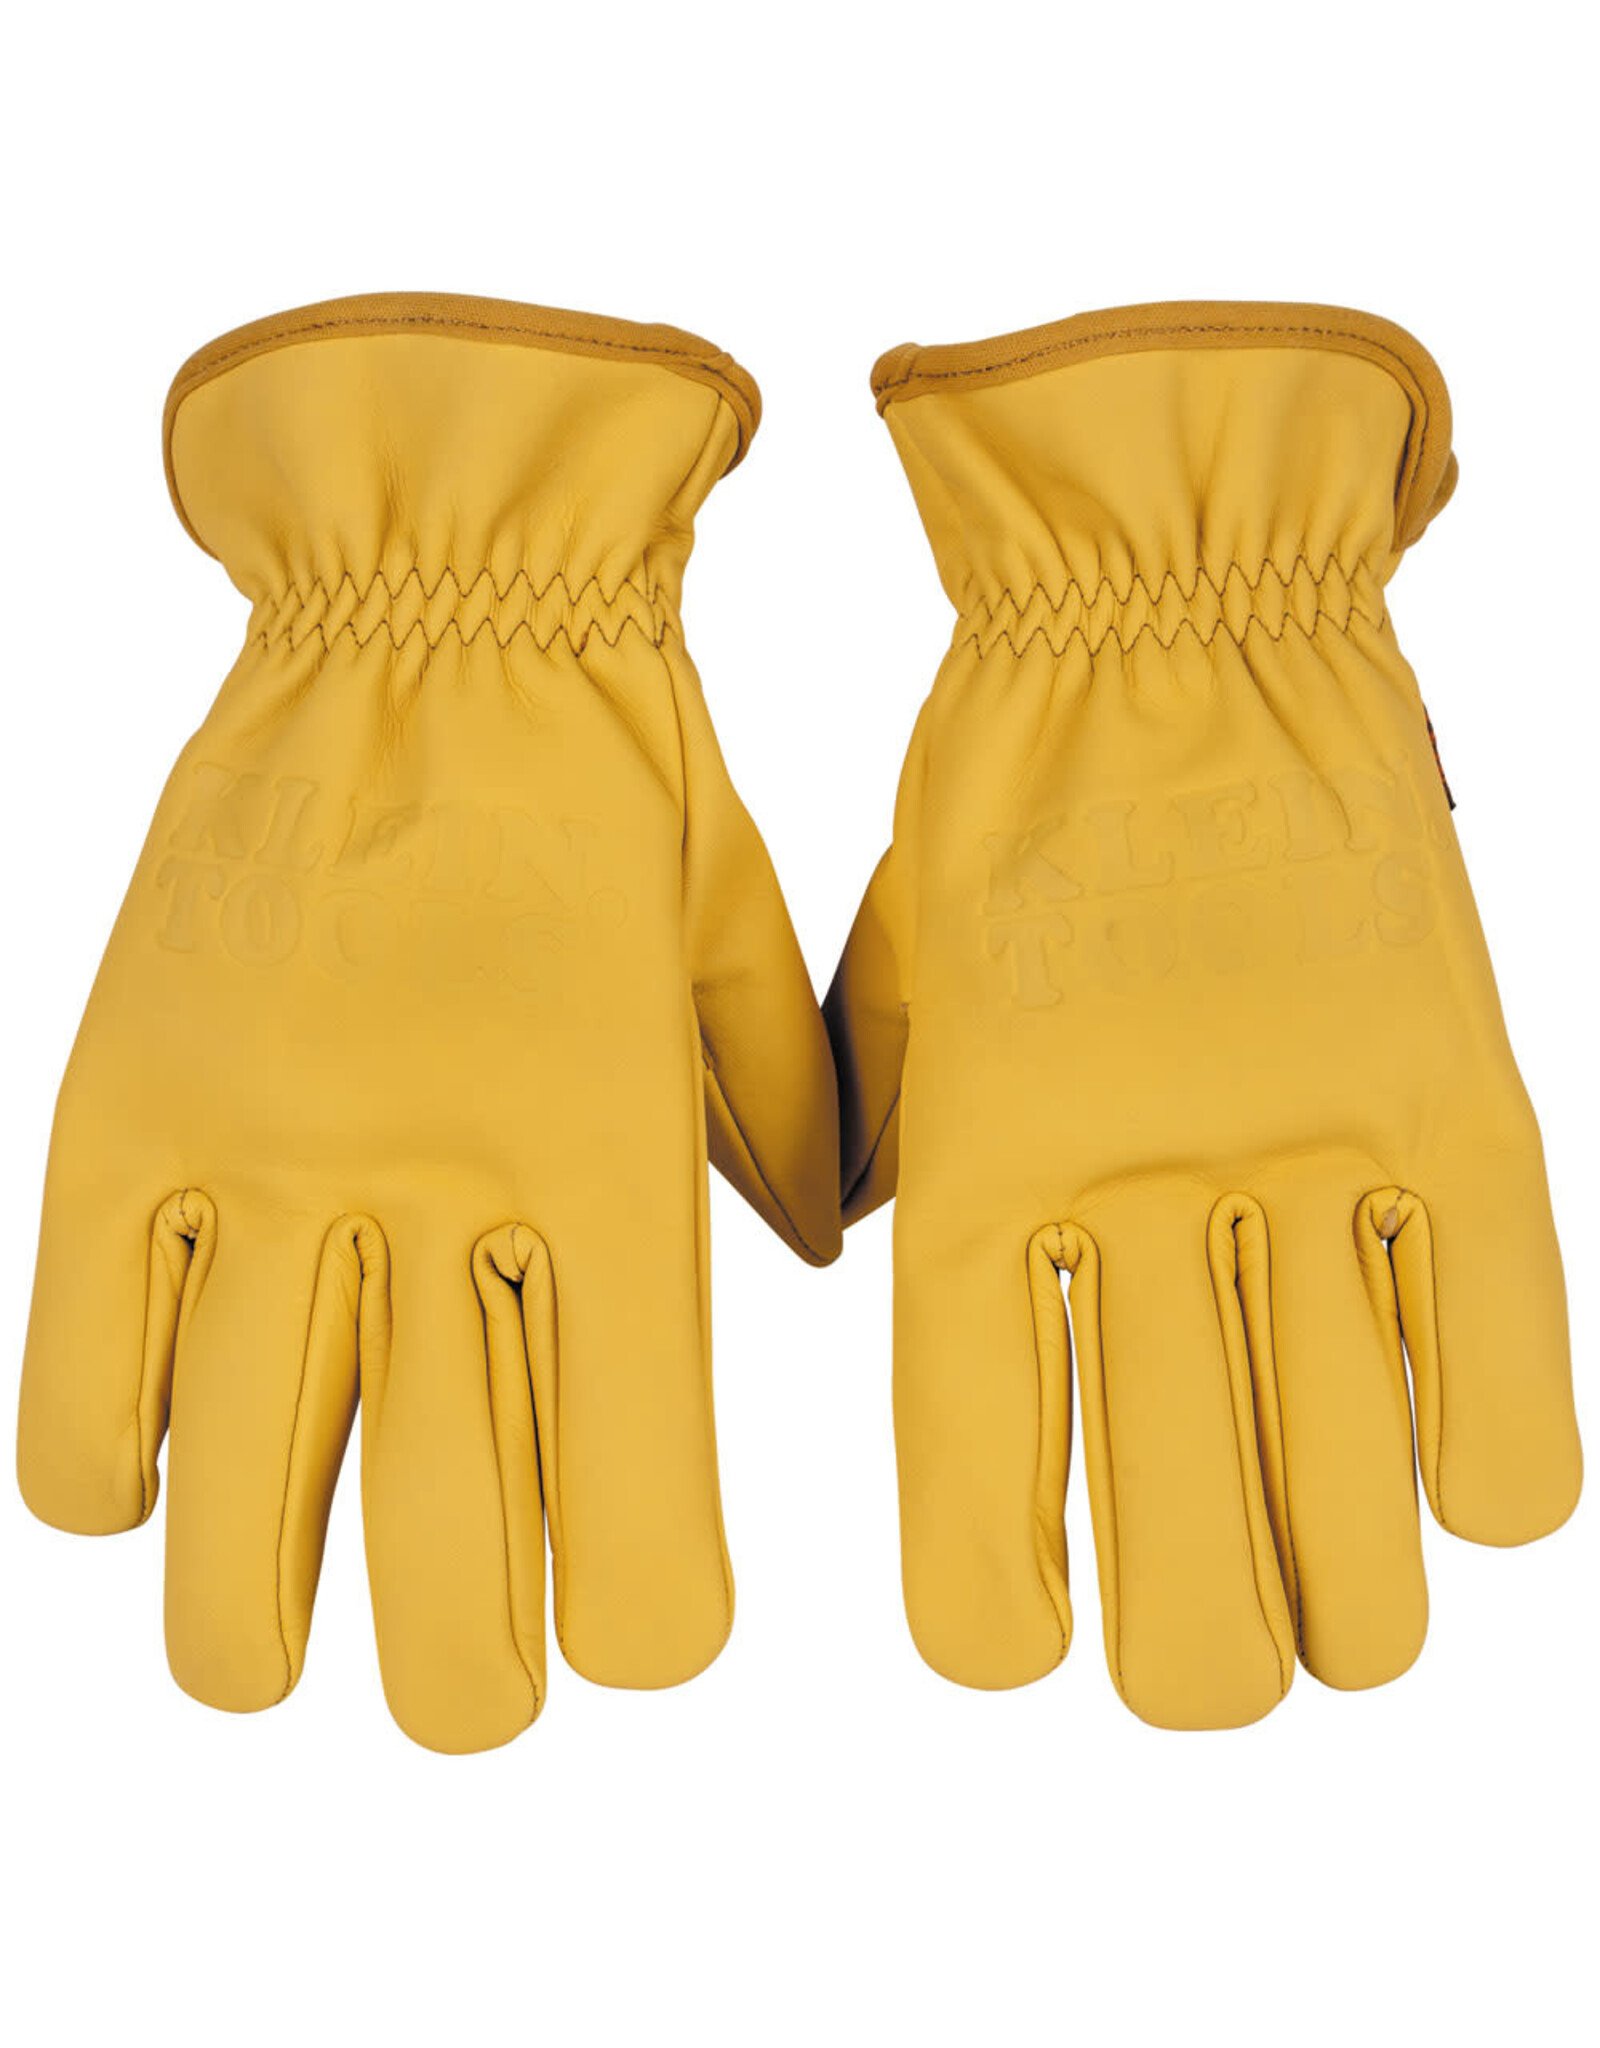 Klein Tools Cowhide Work Gloves, Medium